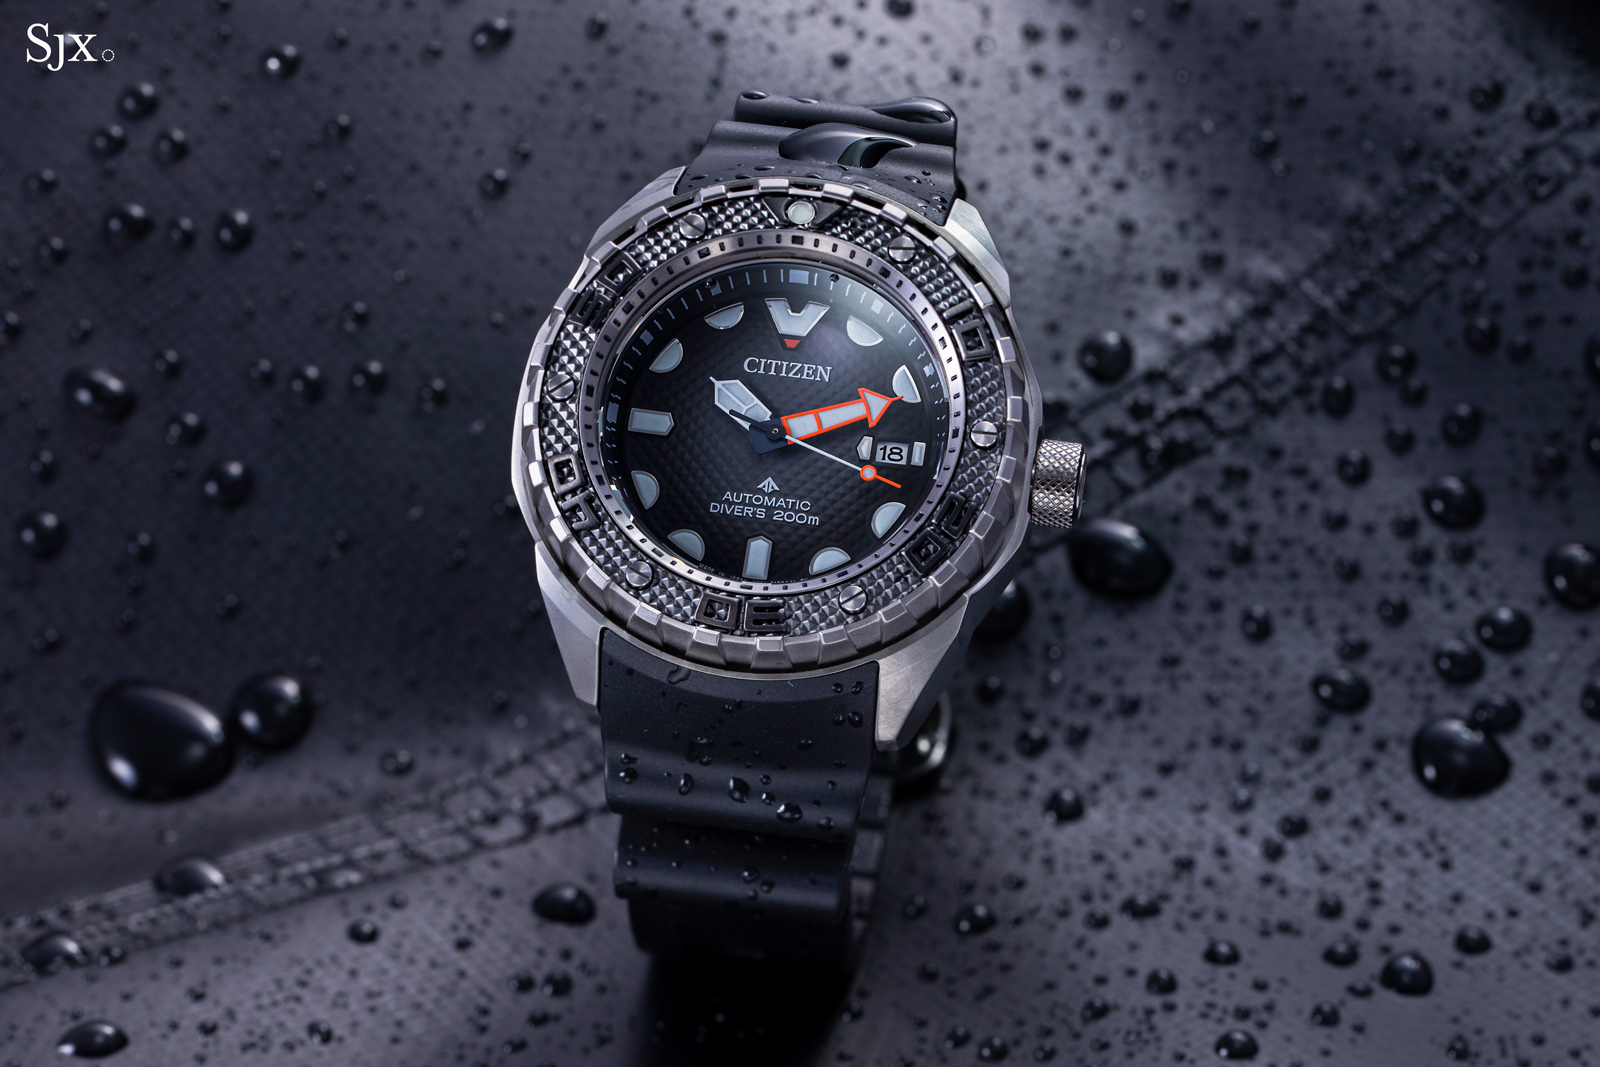 Up Close: Citizen Promaster Mechanical Diver 200 m | SJX Watches